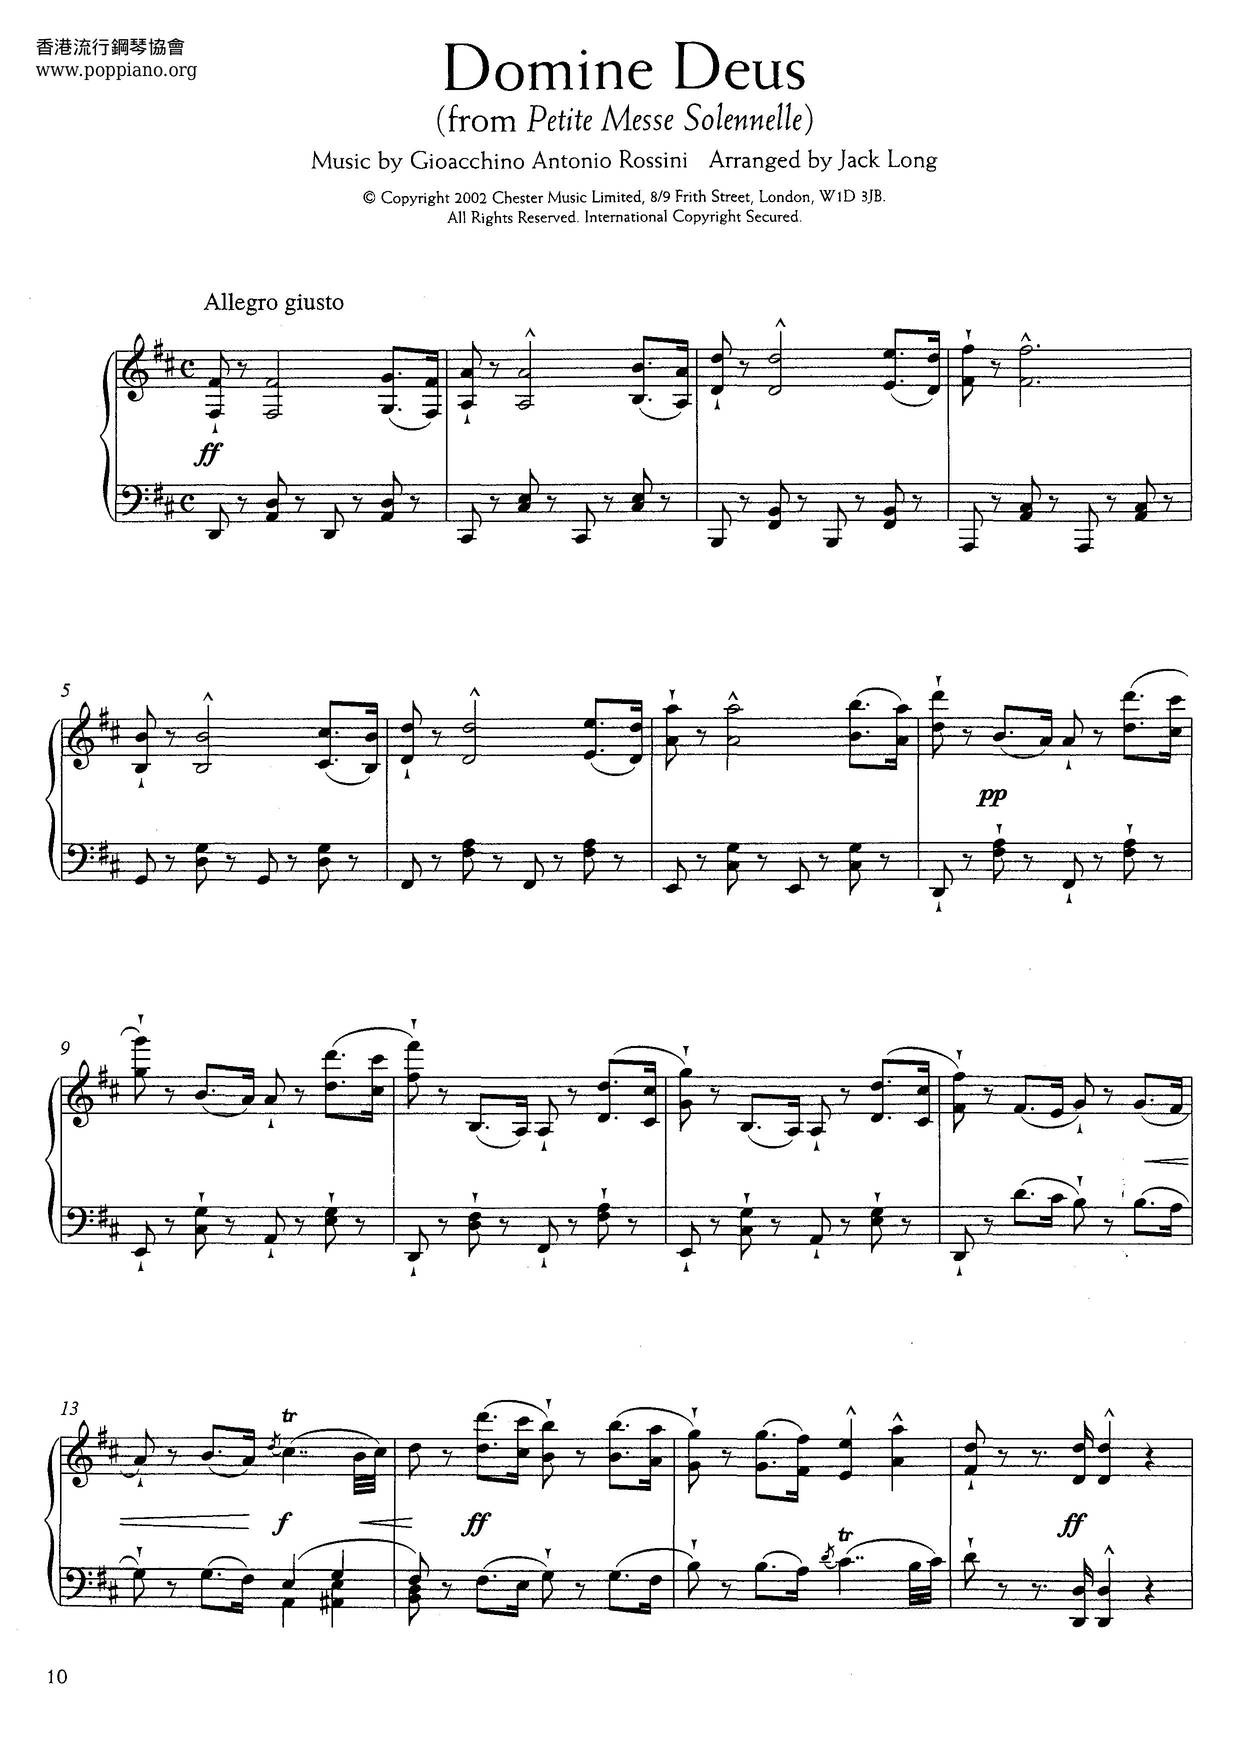 Domine Deus From Petite Messe Solennelle (Rossini) Score